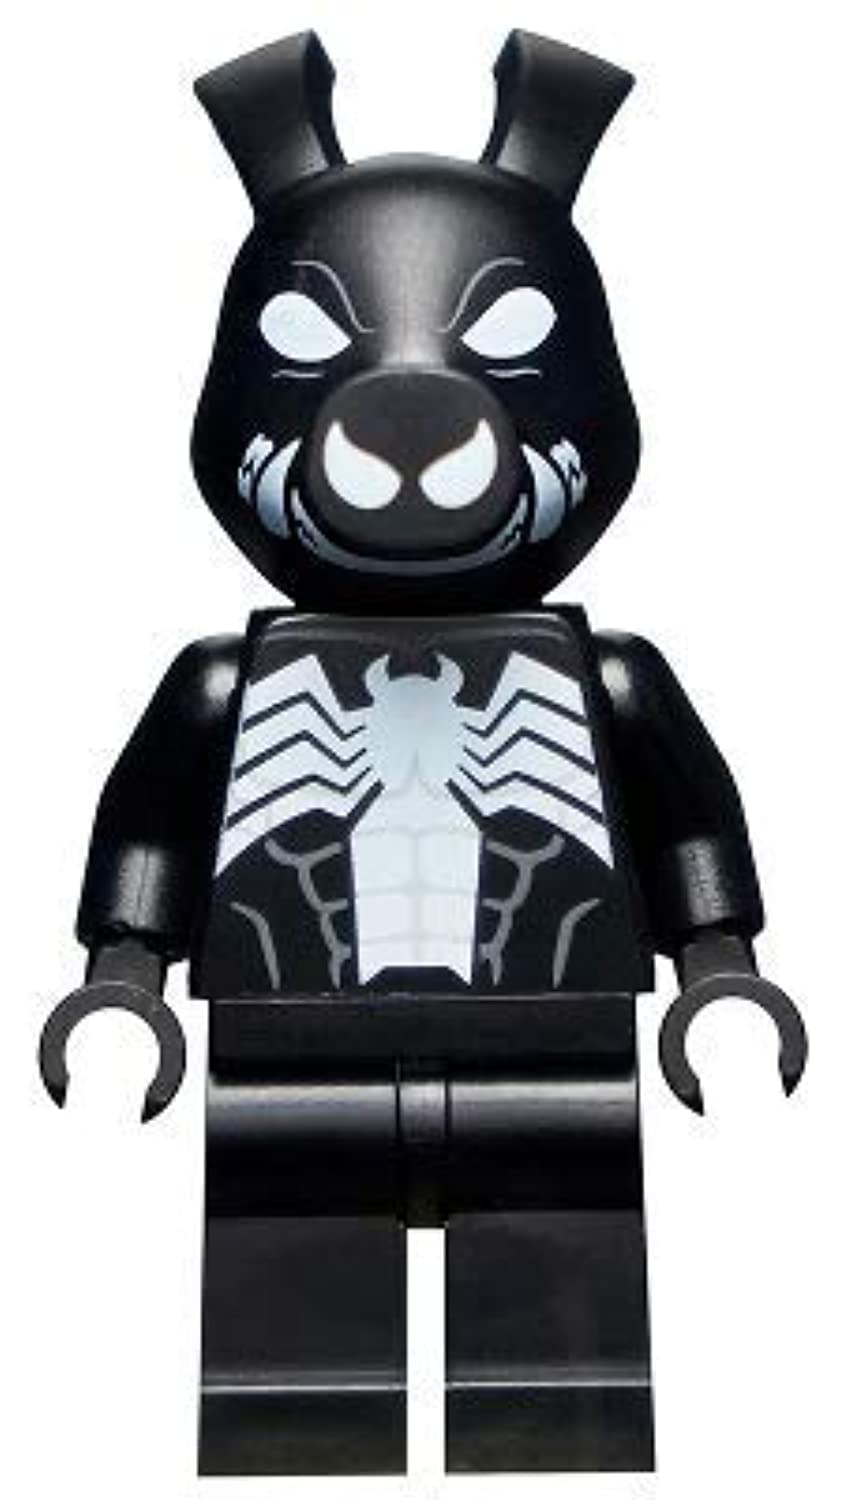 LEGO Marvel 40454 Spider-Man Versus Venom and Iron Venom